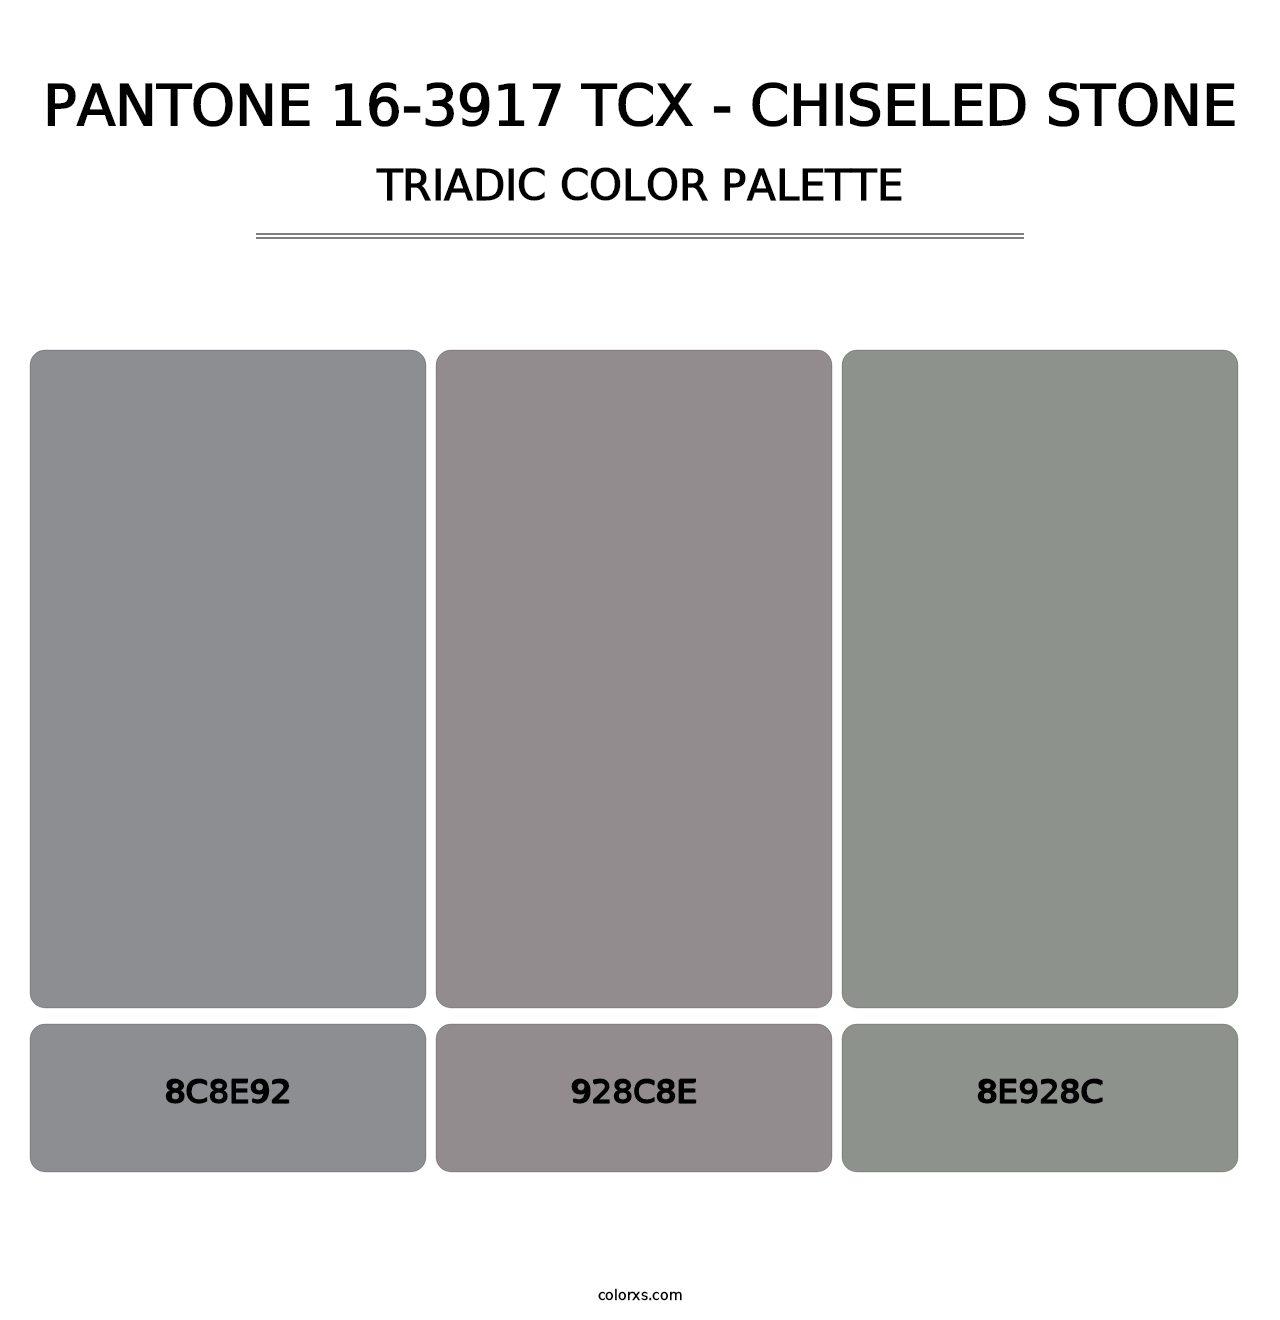 PANTONE 16-3917 TCX - Chiseled Stone - Triadic Color Palette